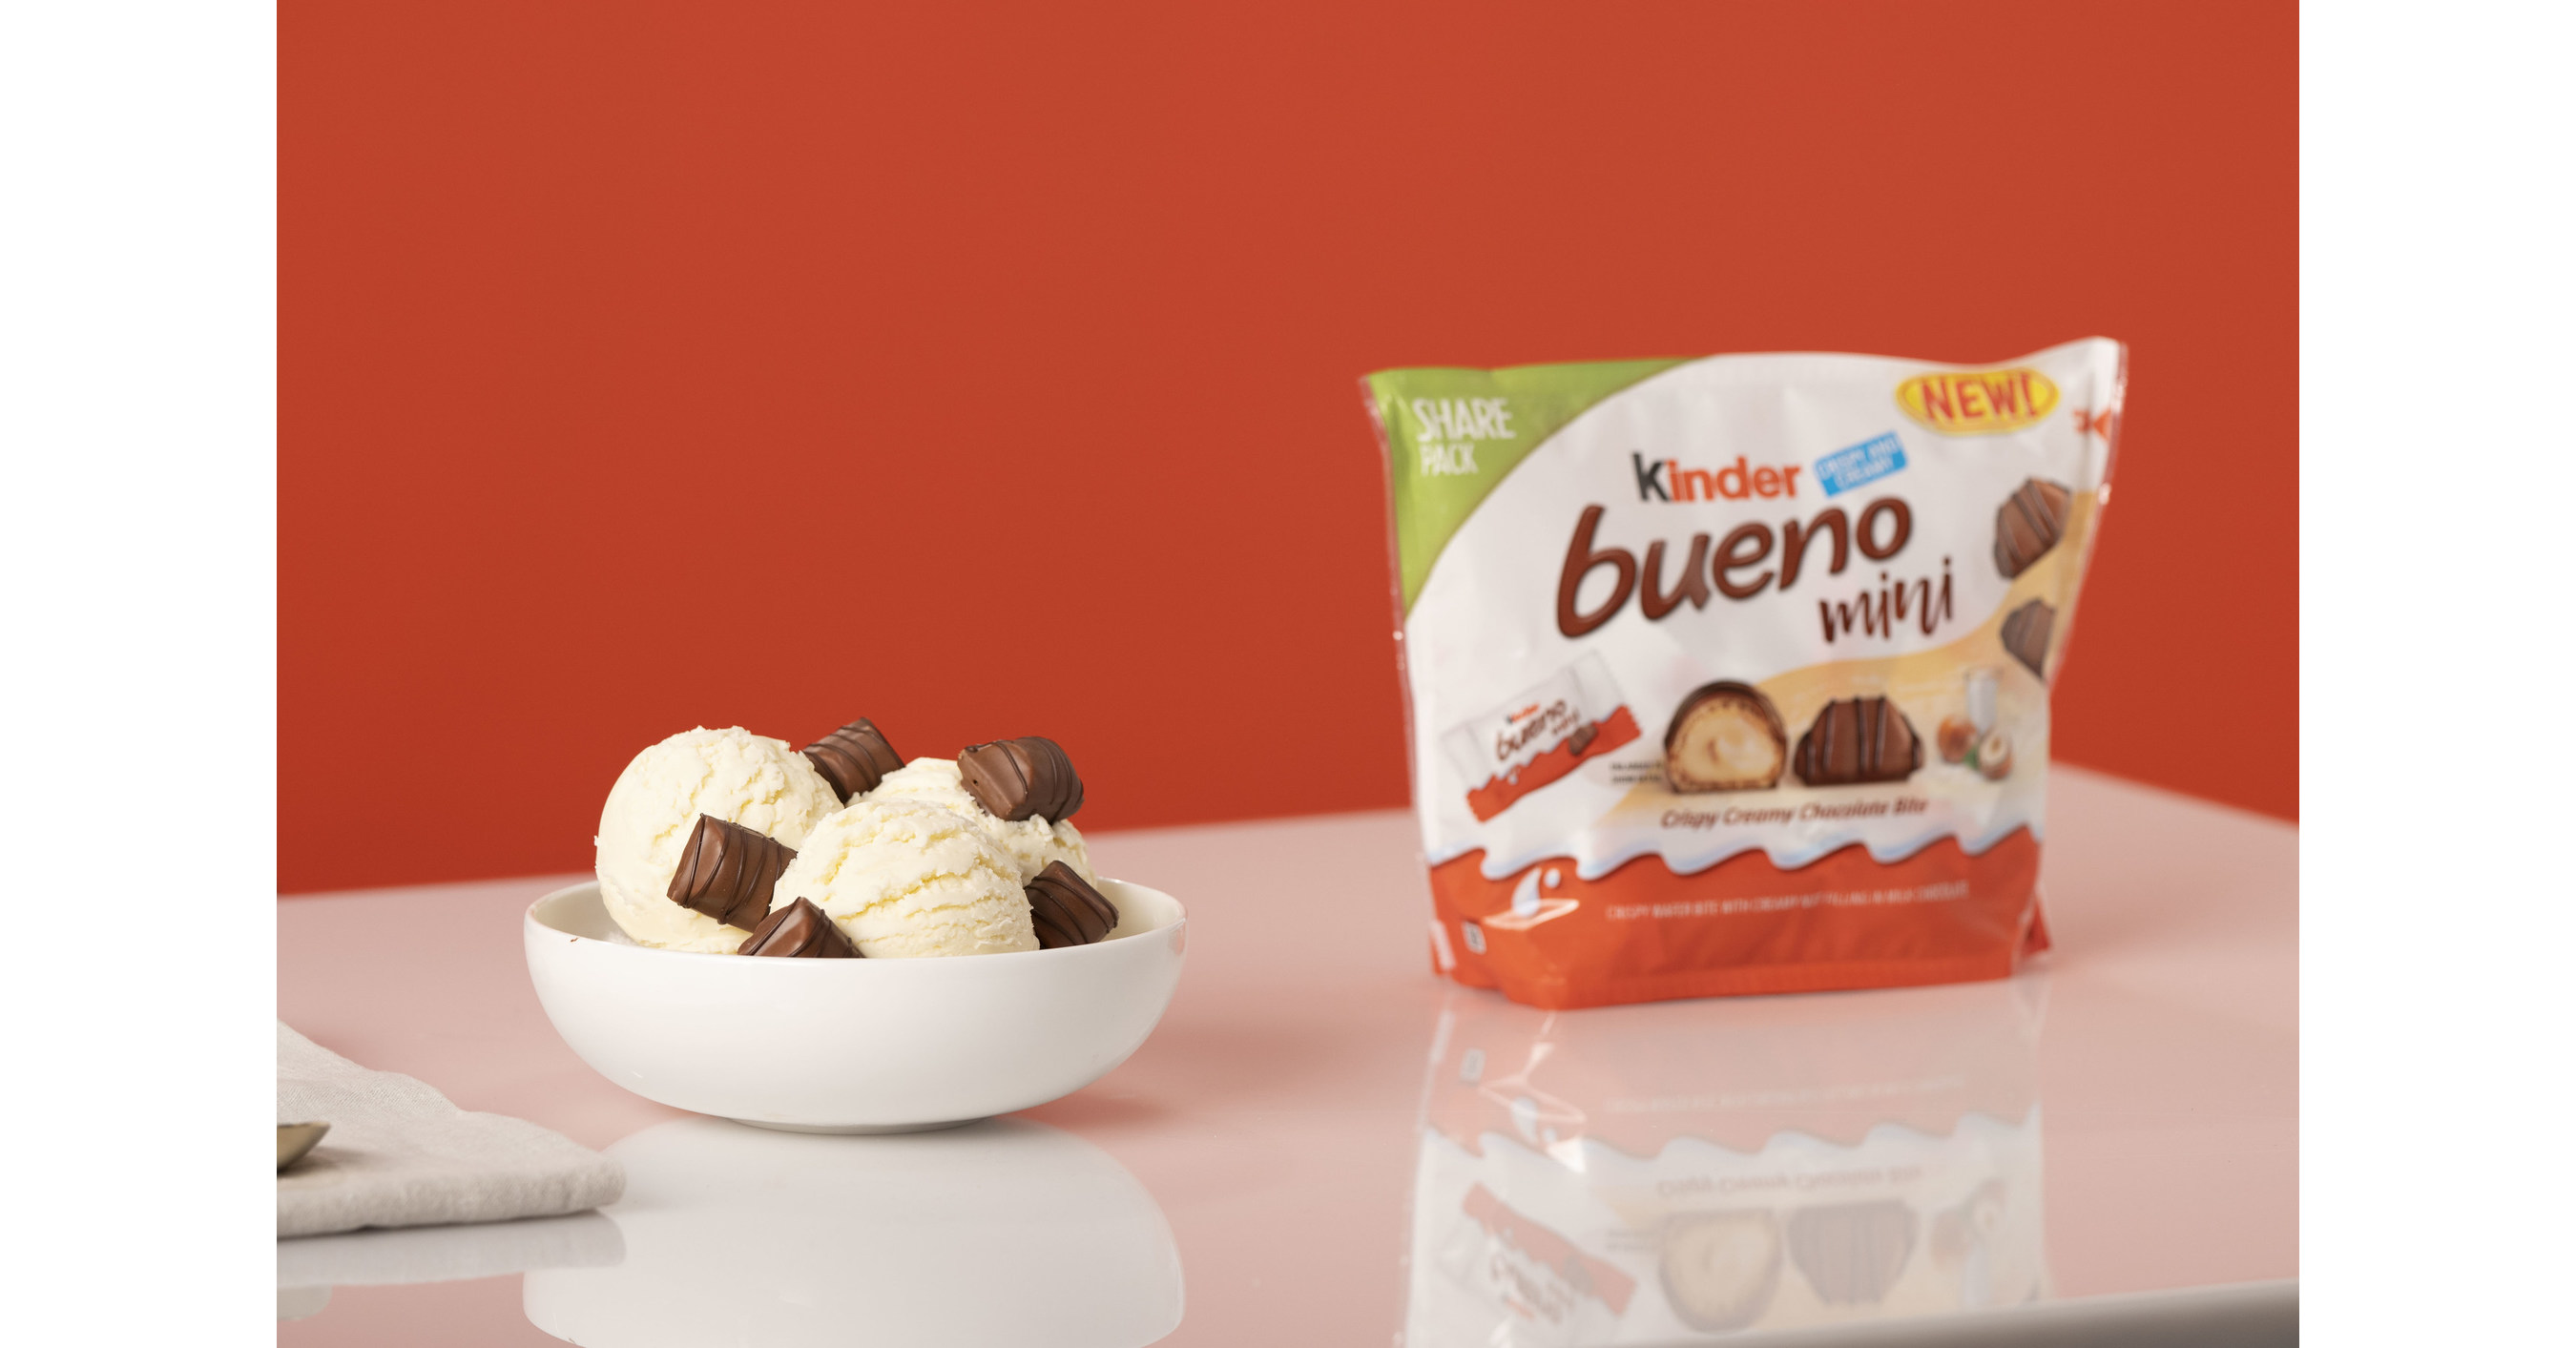 Kinder Bueno tops National Chocolate Week poll, as indulgence set